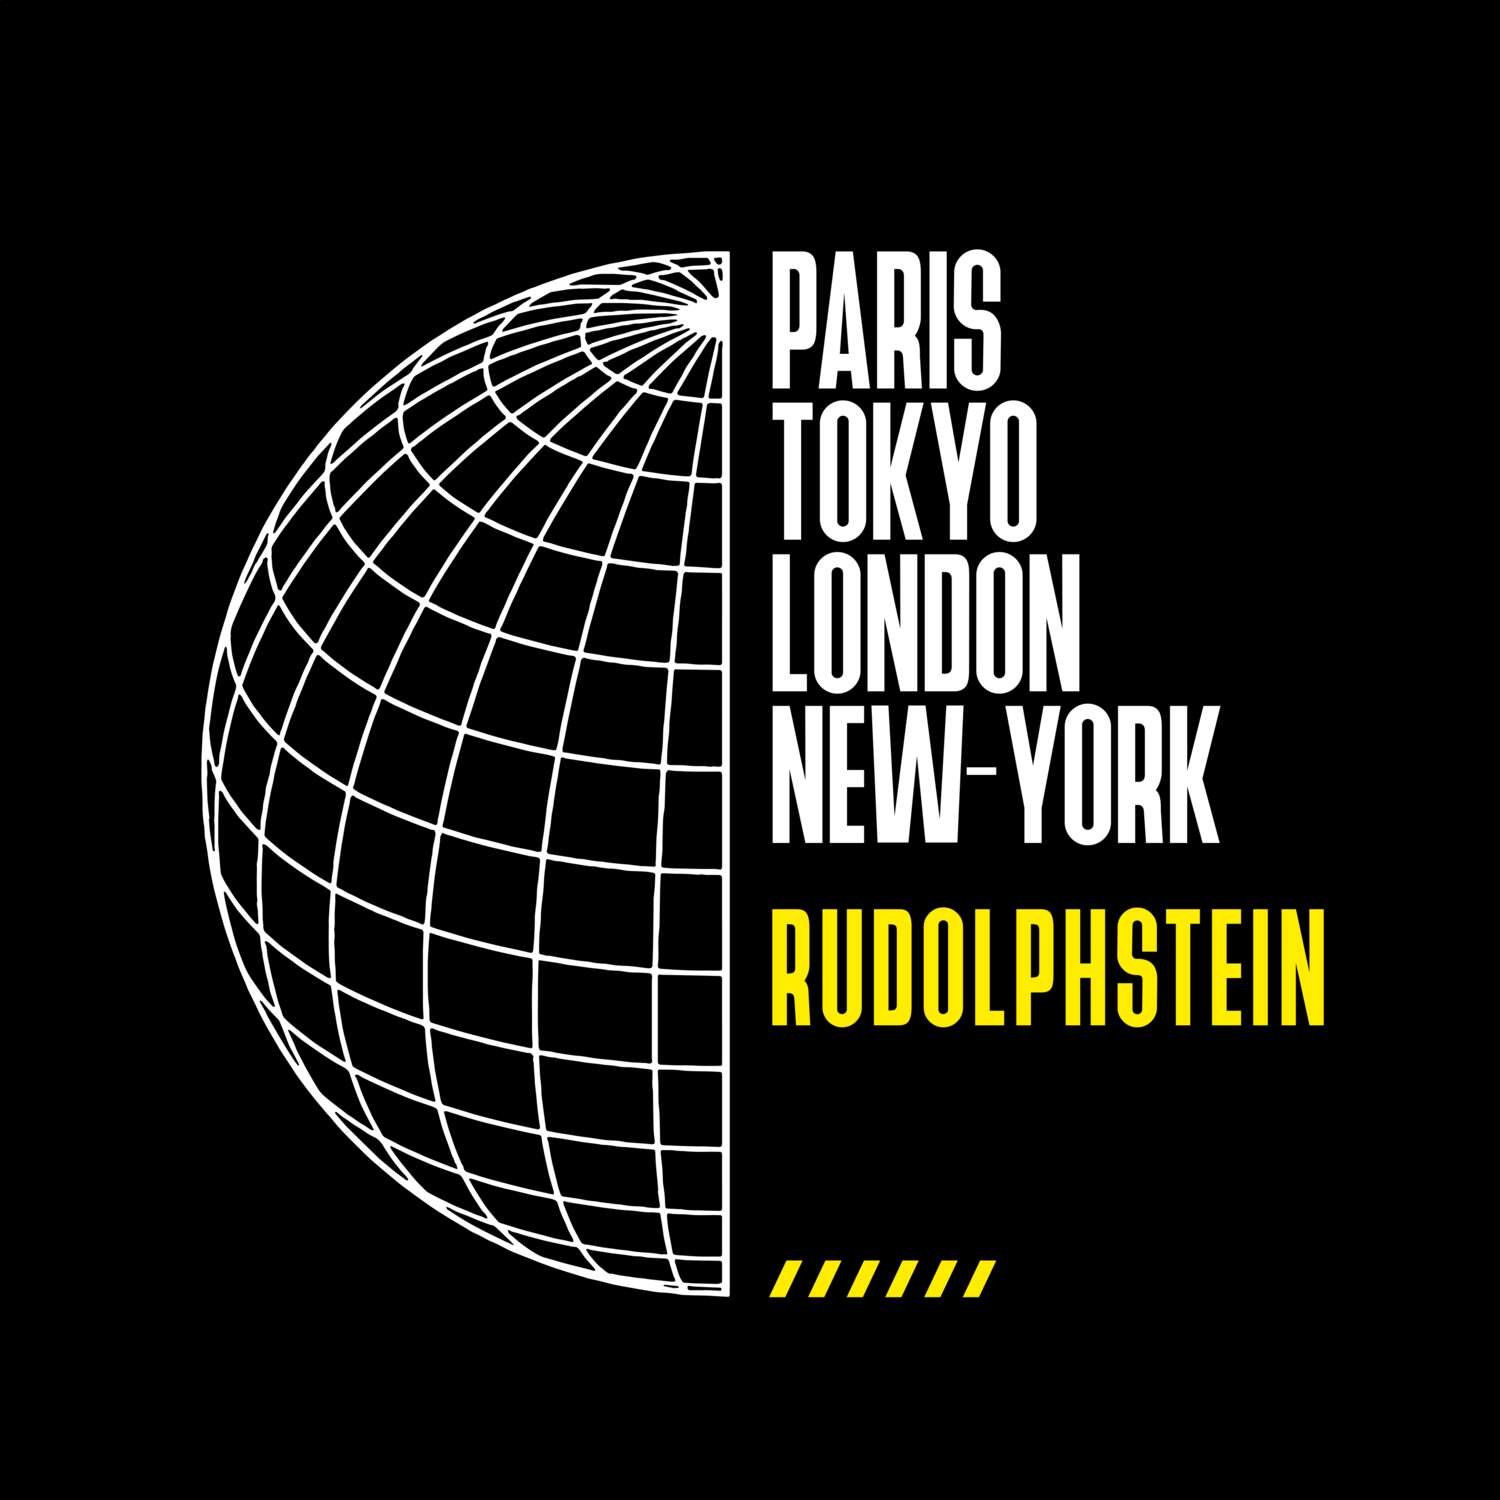 Rudolphstein T-Shirt »Paris Tokyo London«